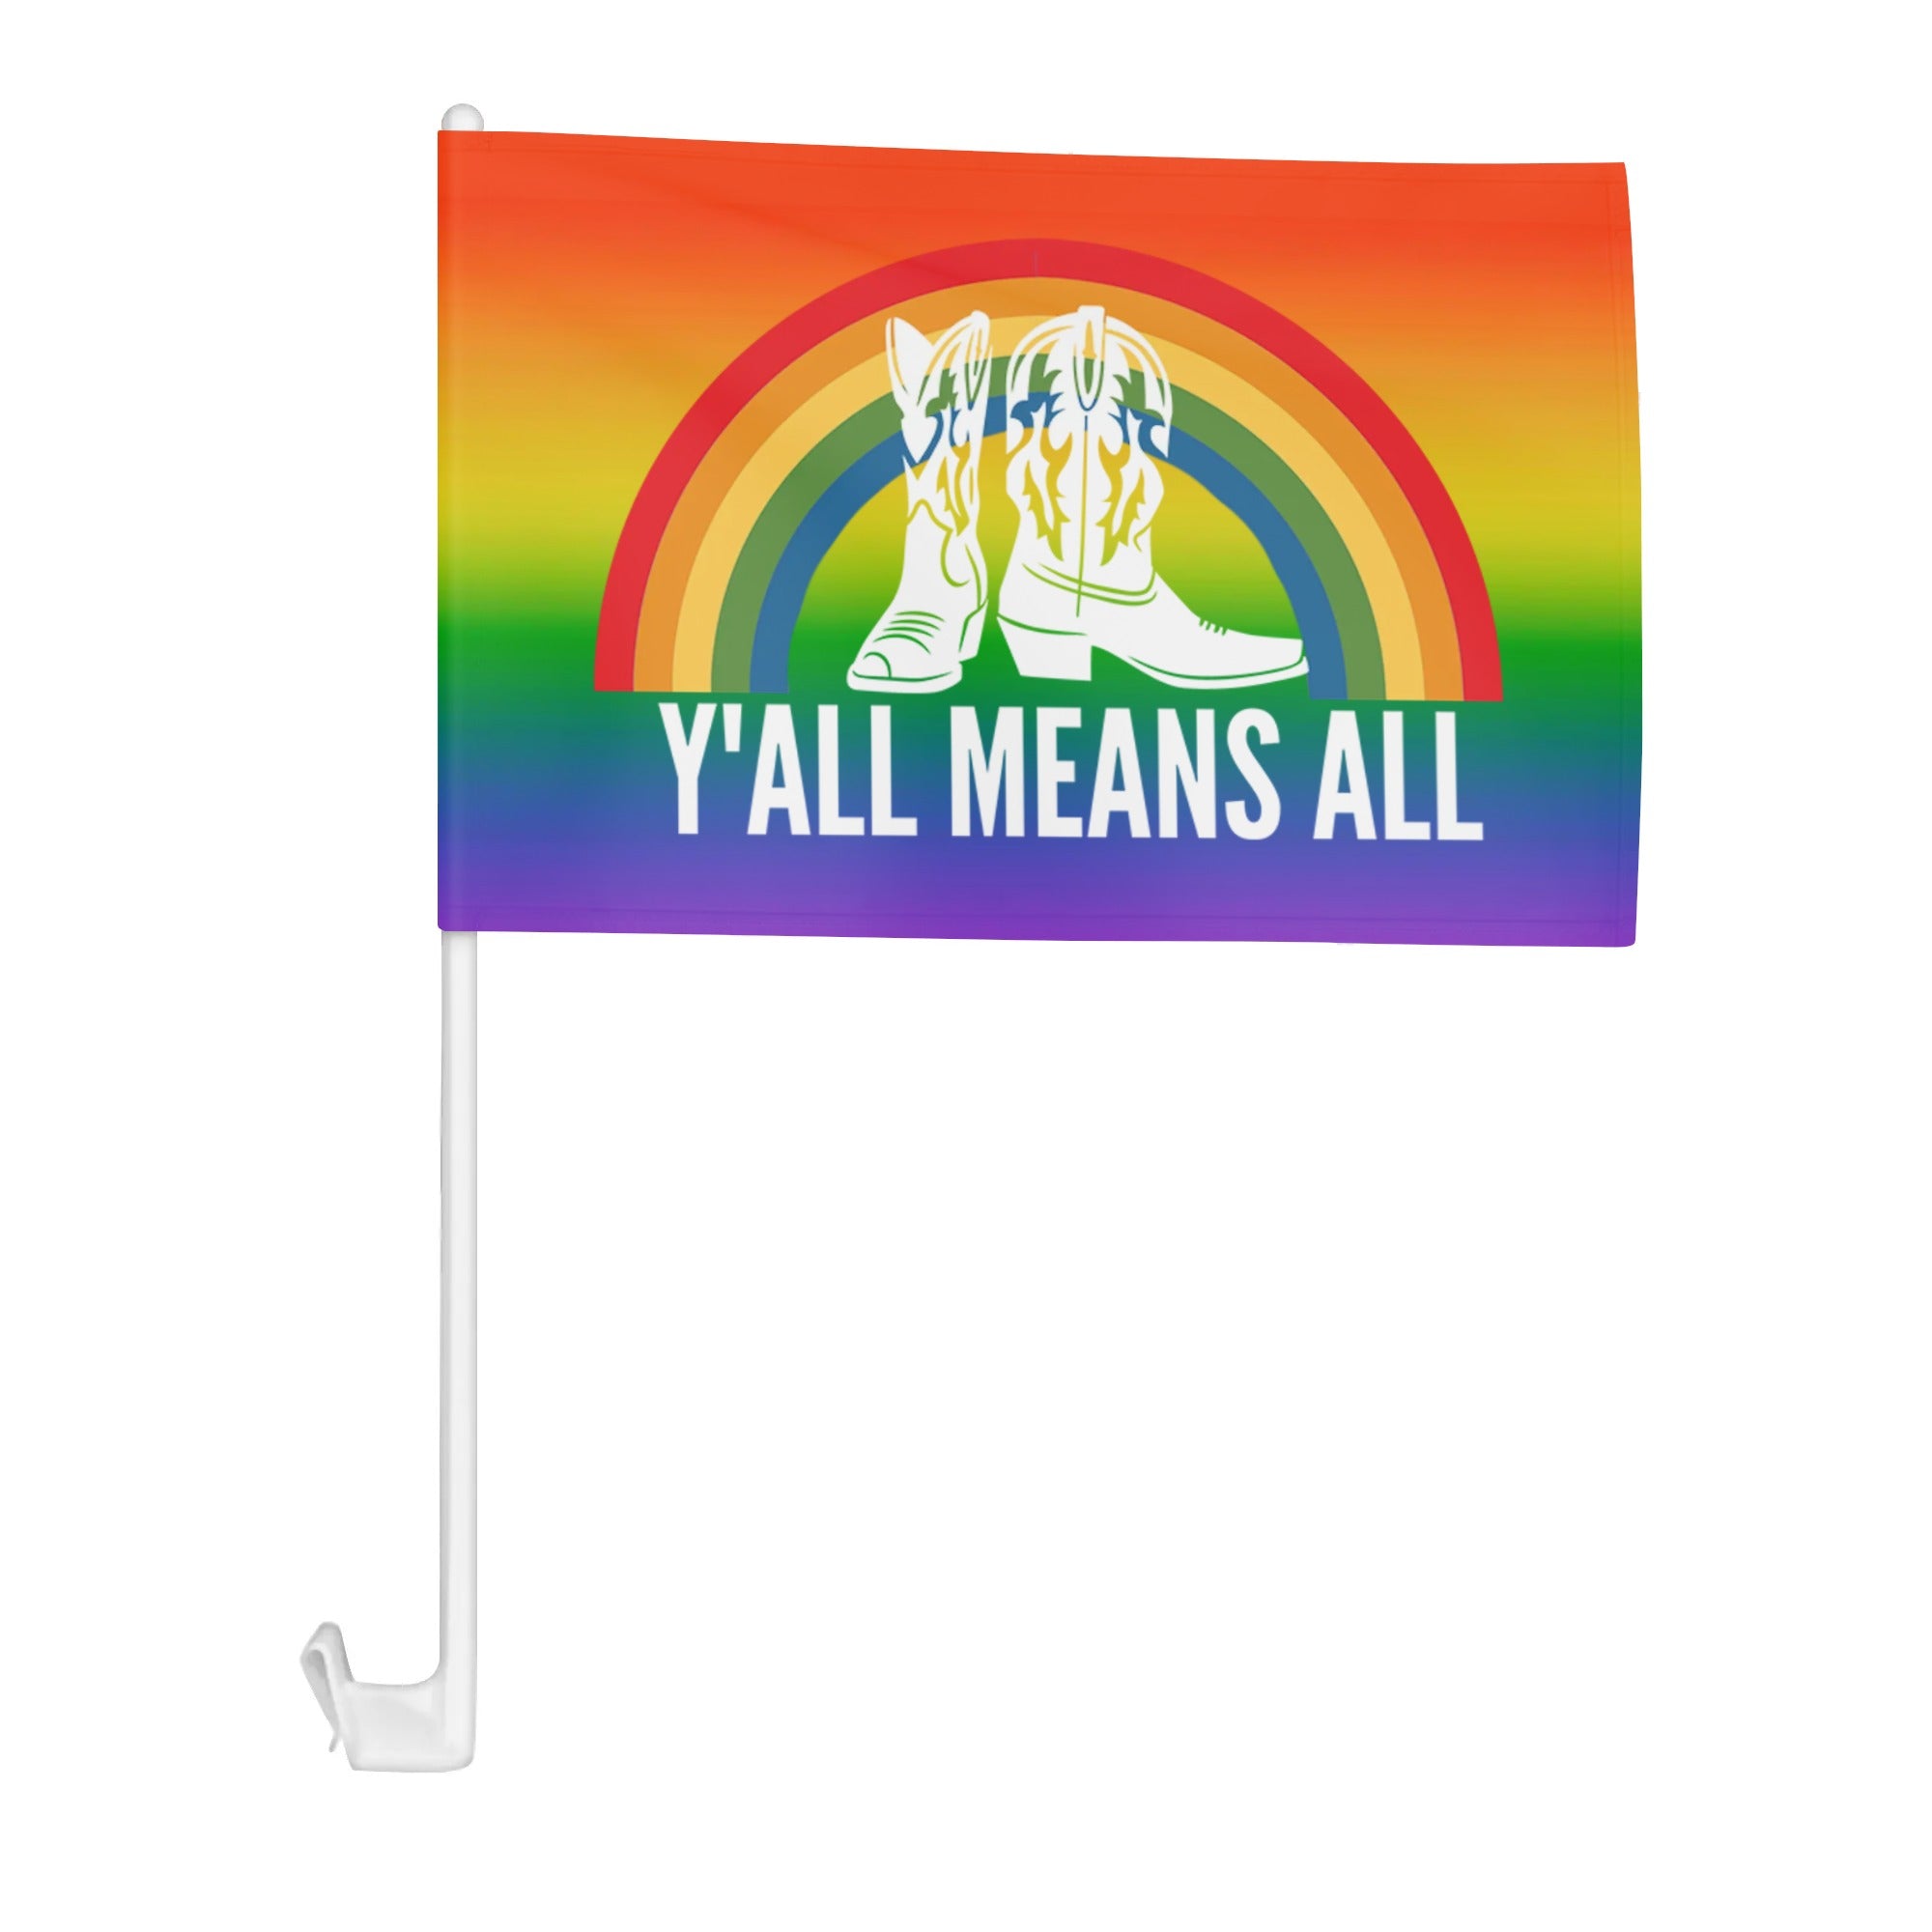 Yall Means All Car Flag 12 x 18